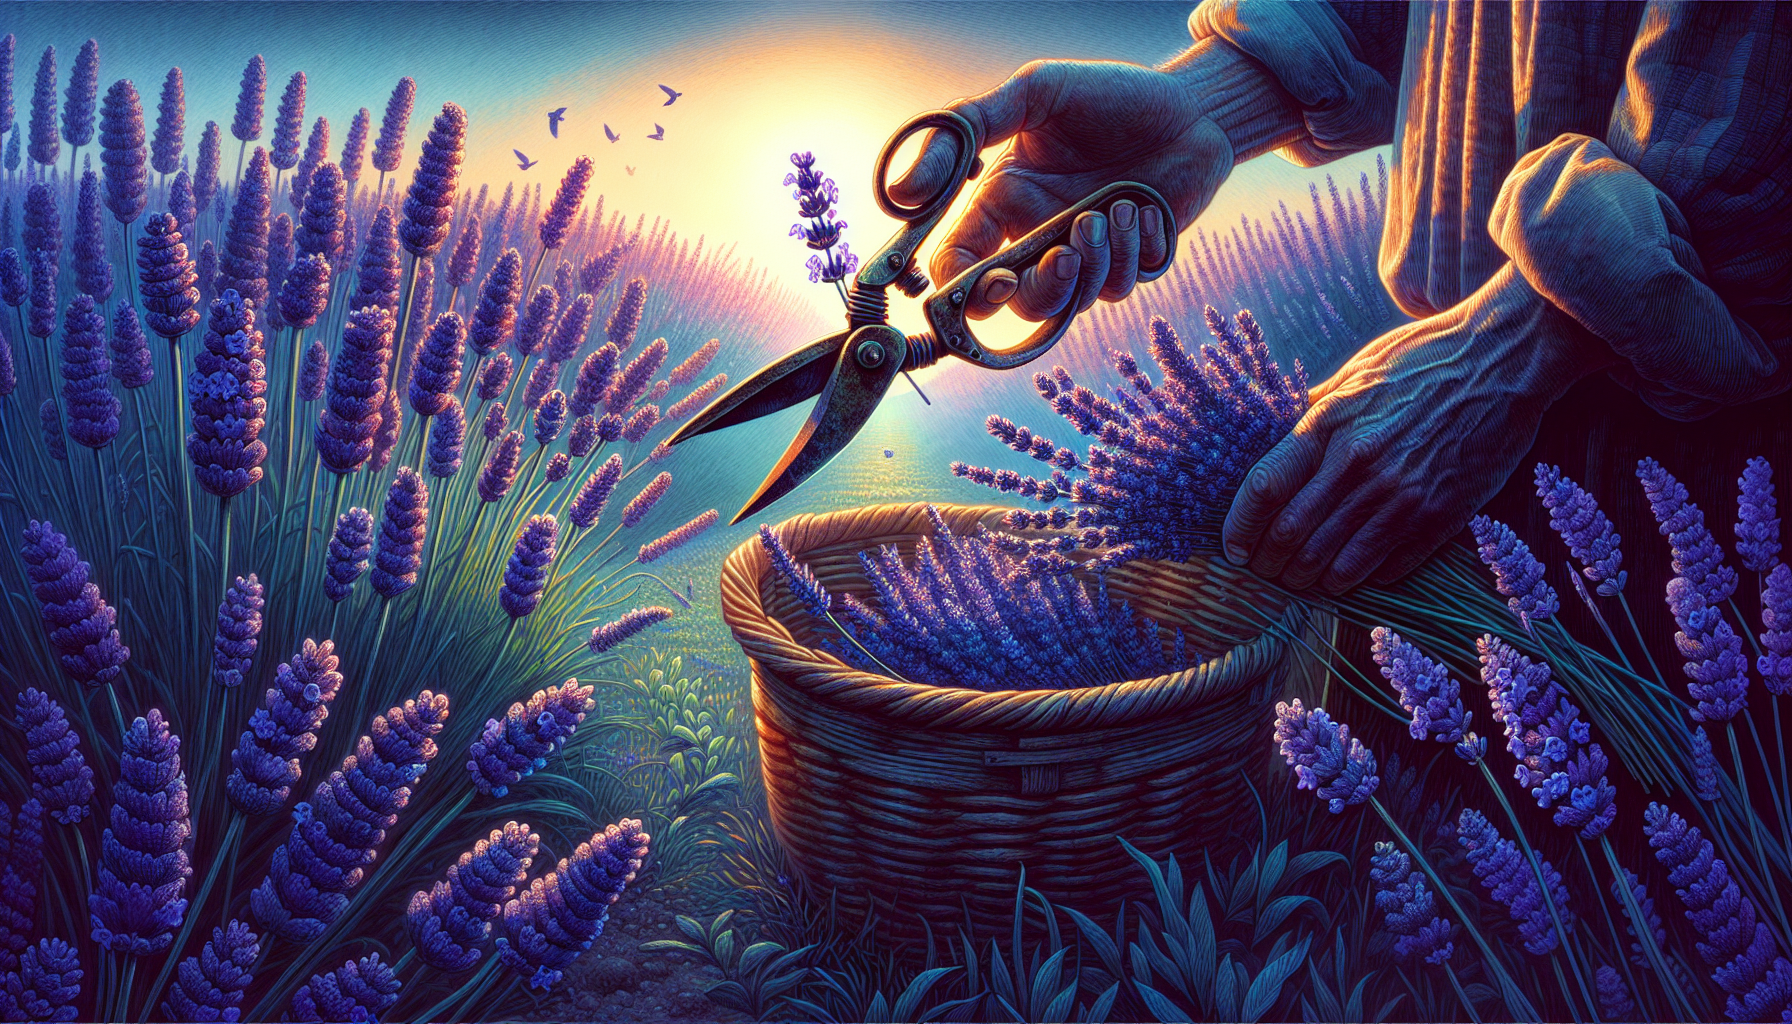 Illustration of harvesting lavender flowers